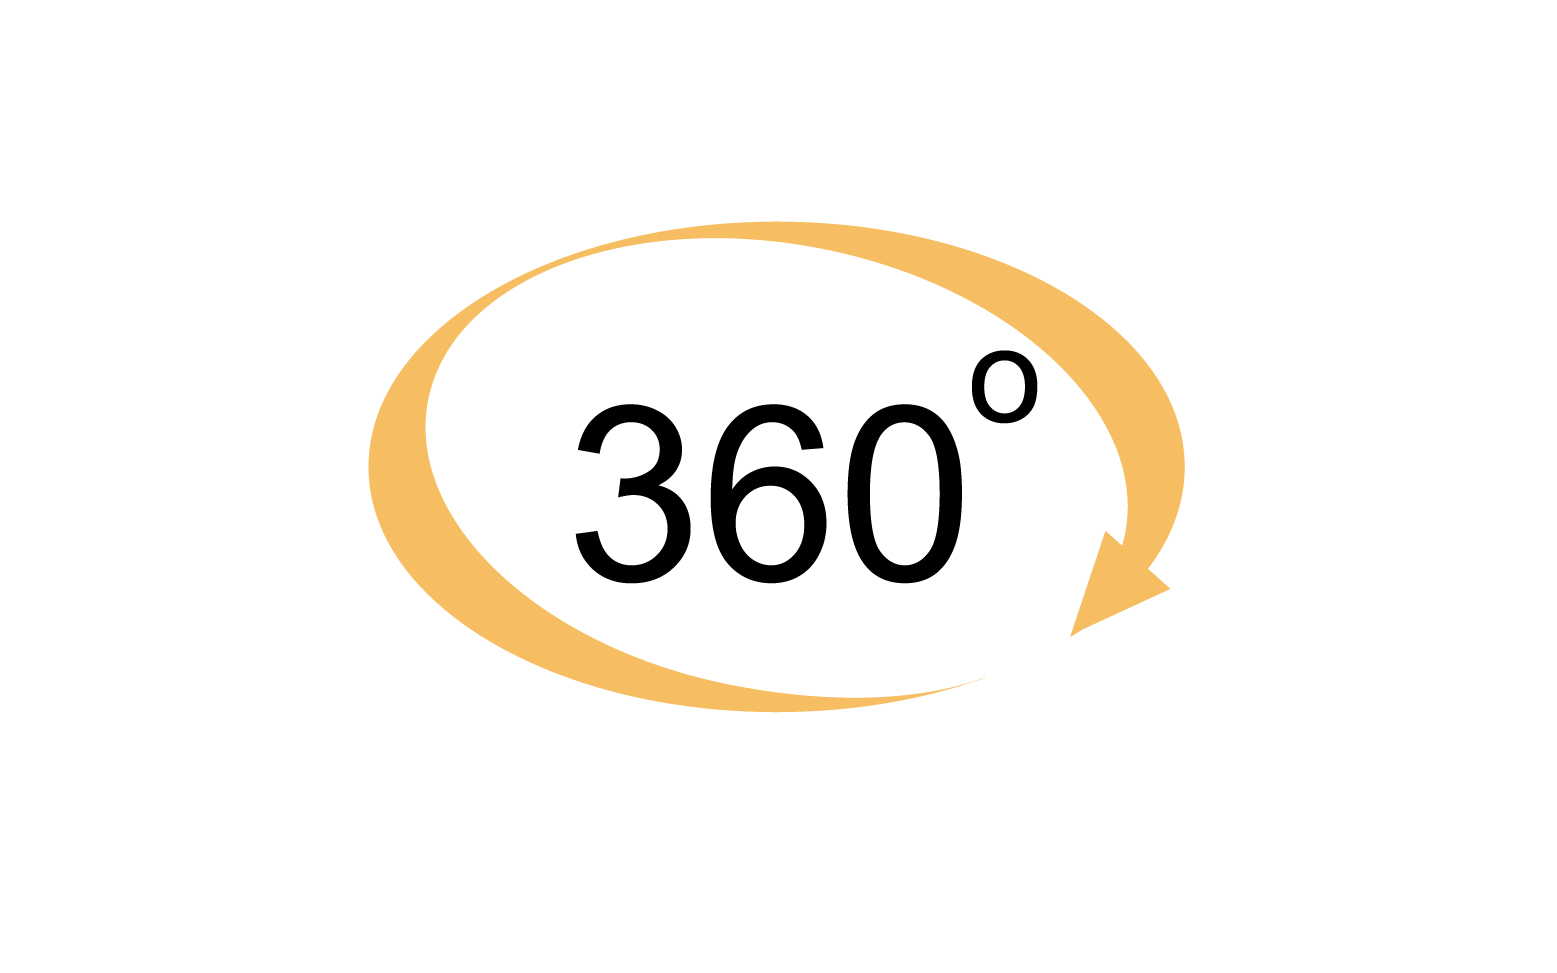 360 degree angle rotation icon symbol logo version v24